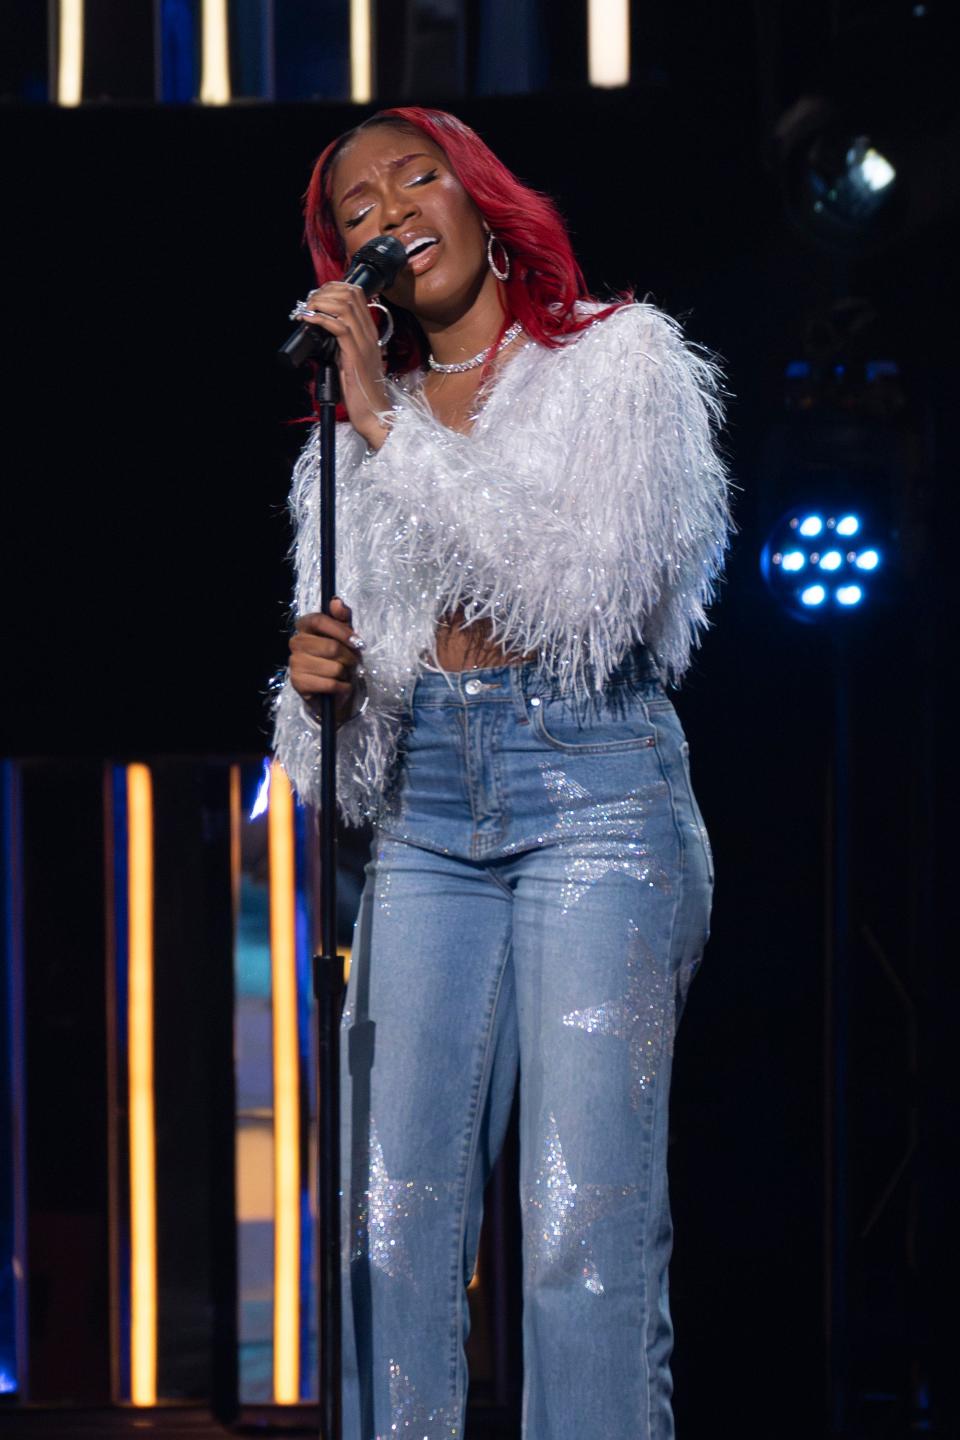 Madaí Chakell performs during "Hollywood Week's" "Idol Arena" on Season 22, Episode 6, of "American Idol."